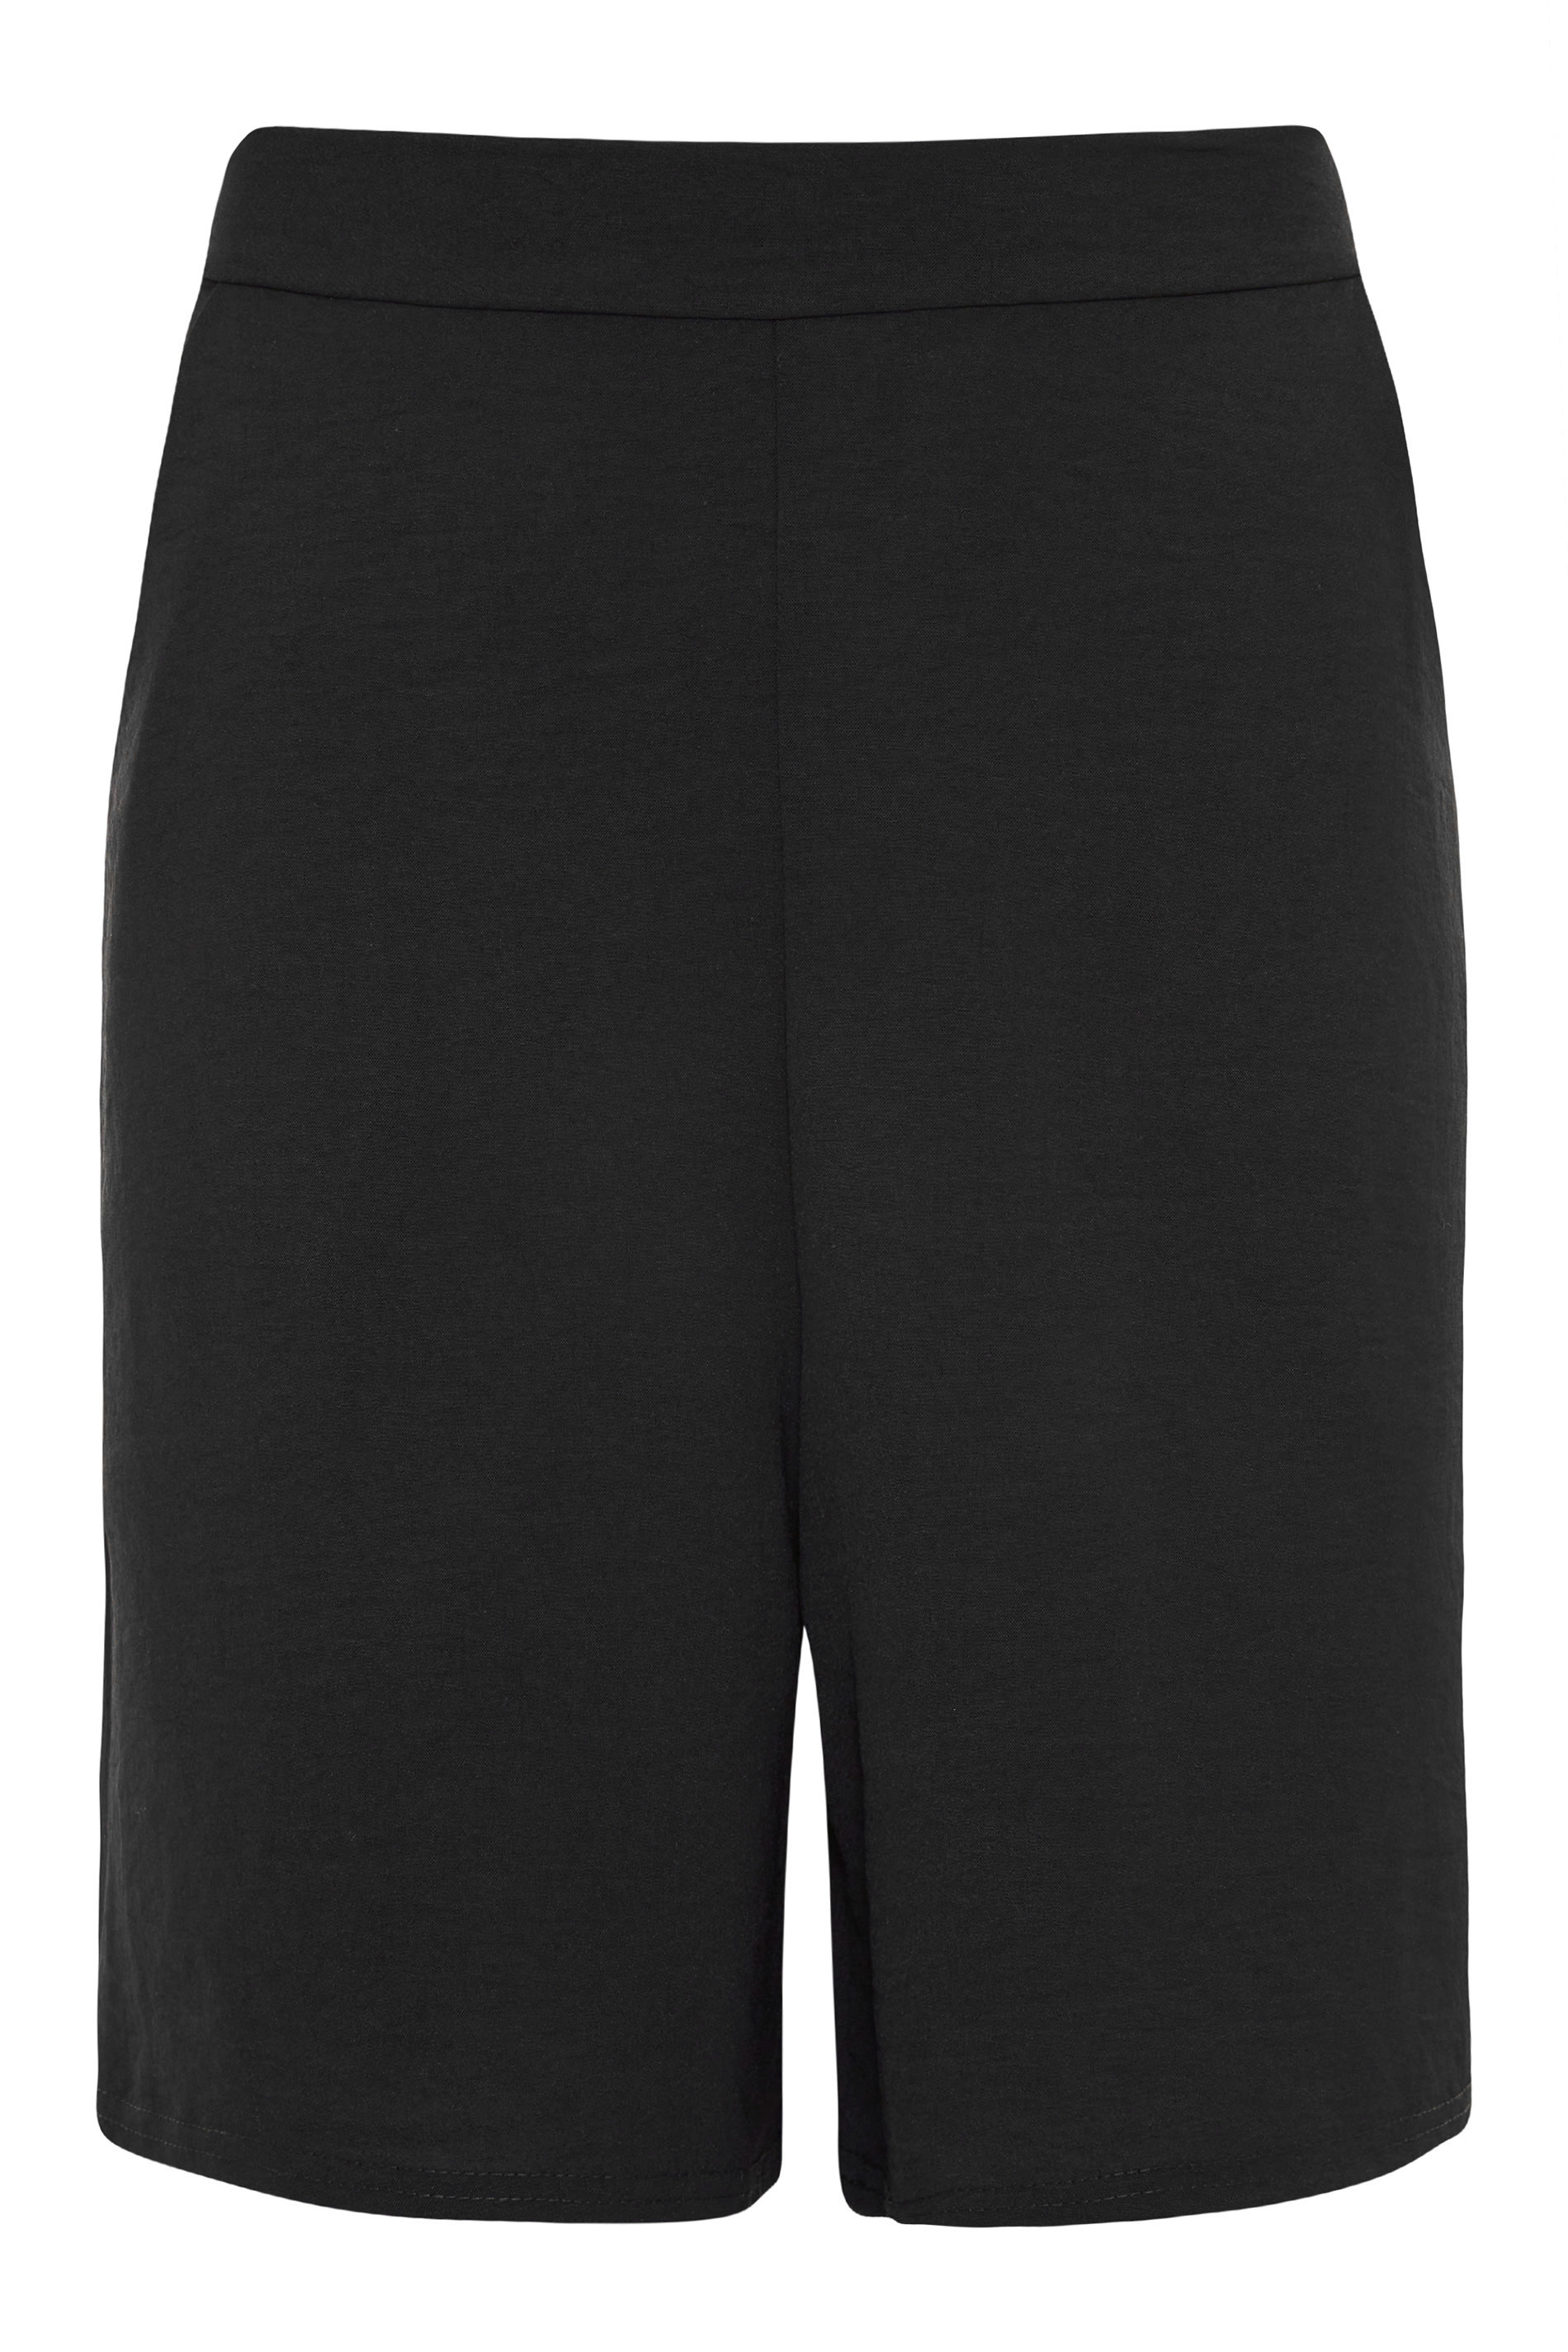 LTS Black Textured Shorts | Long Tall Sally